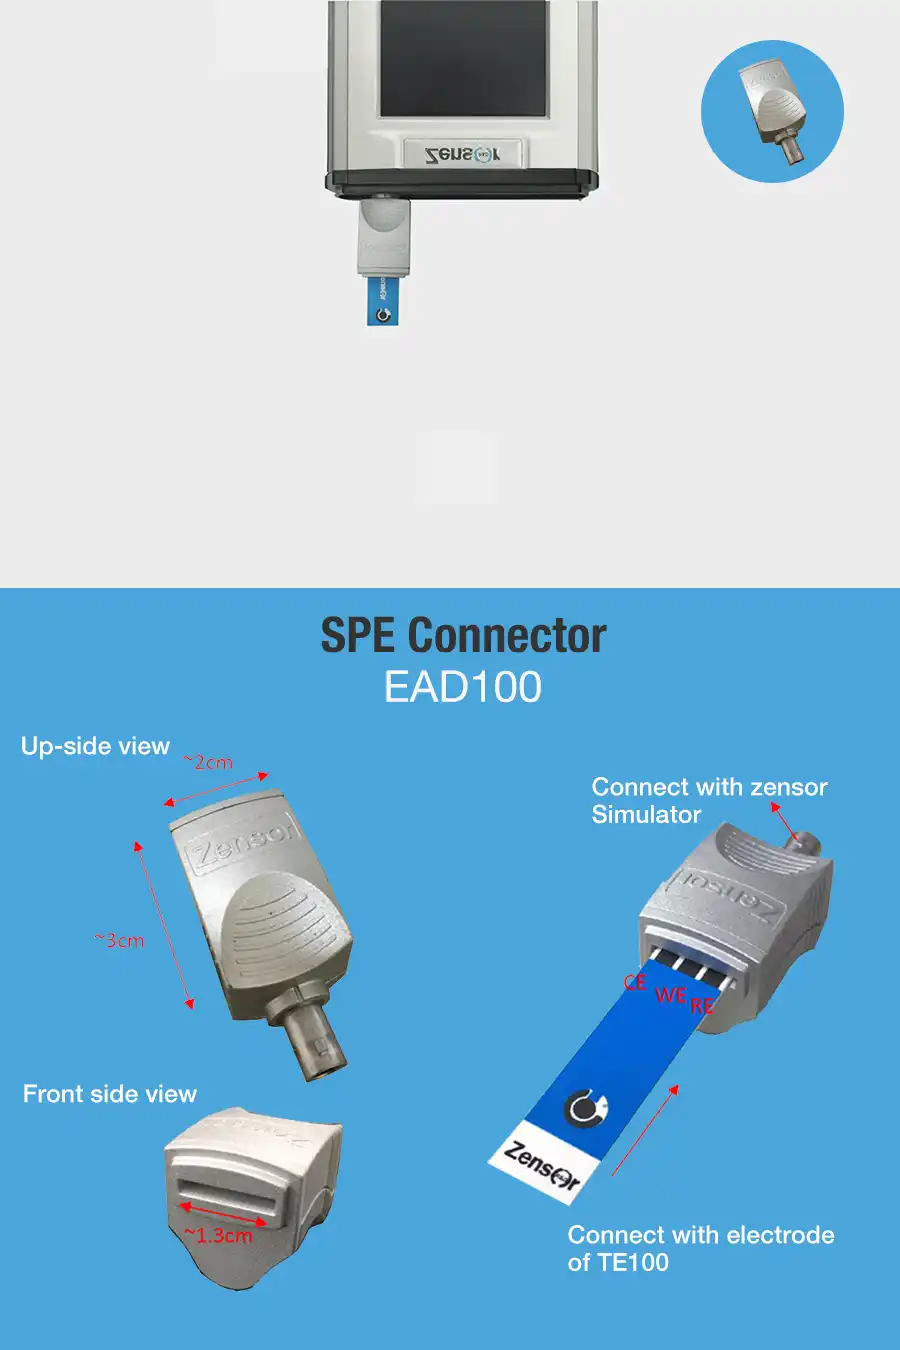  multiple connector & cable of
                                        electrochemical
                                        potentiostat/simulator-Zensor
                                        R&D-ECAS100